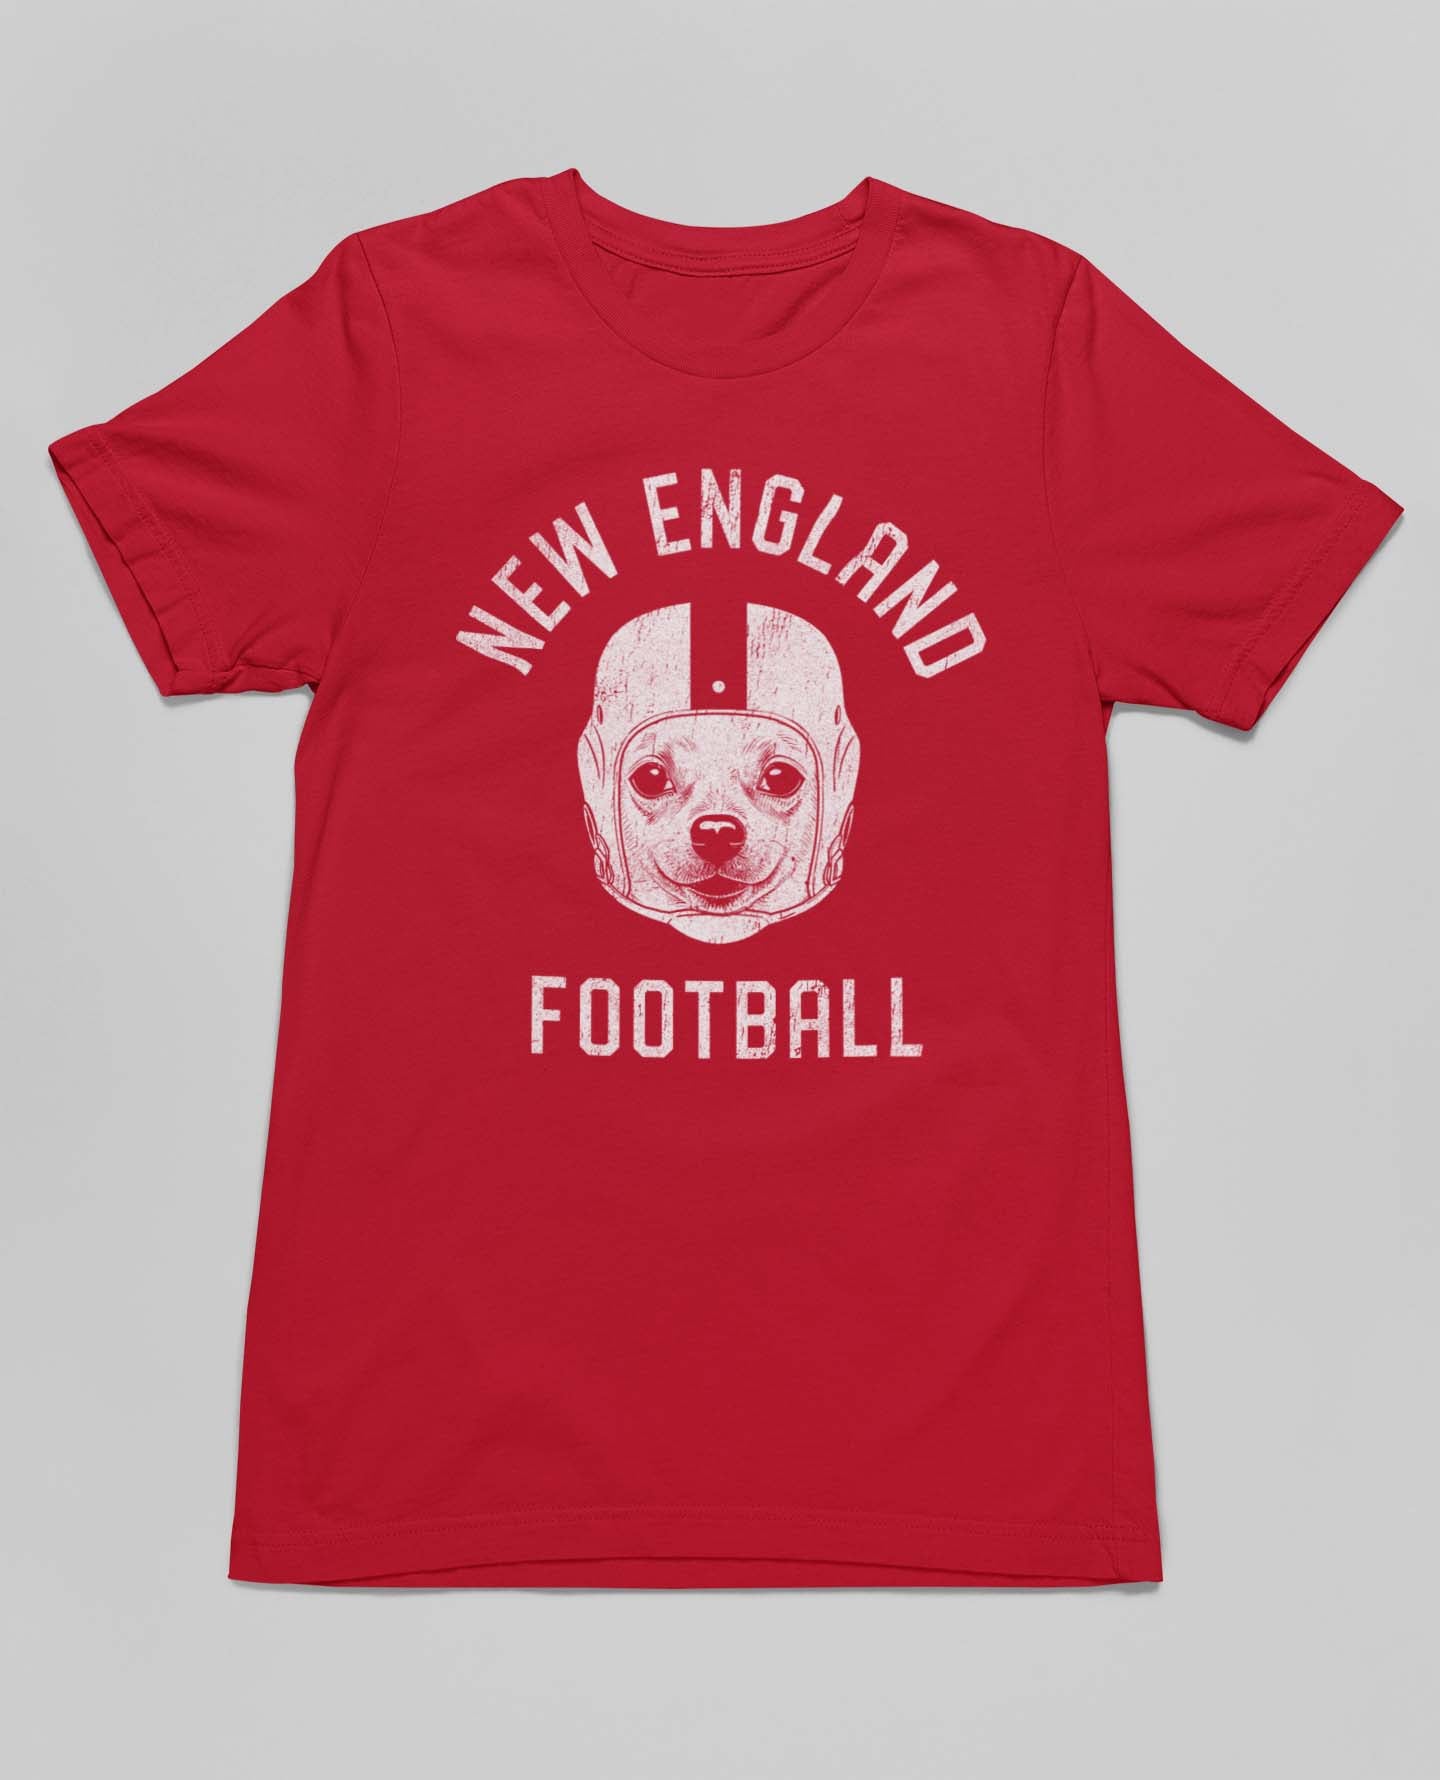 New England Football Chihuahua T-Shirt